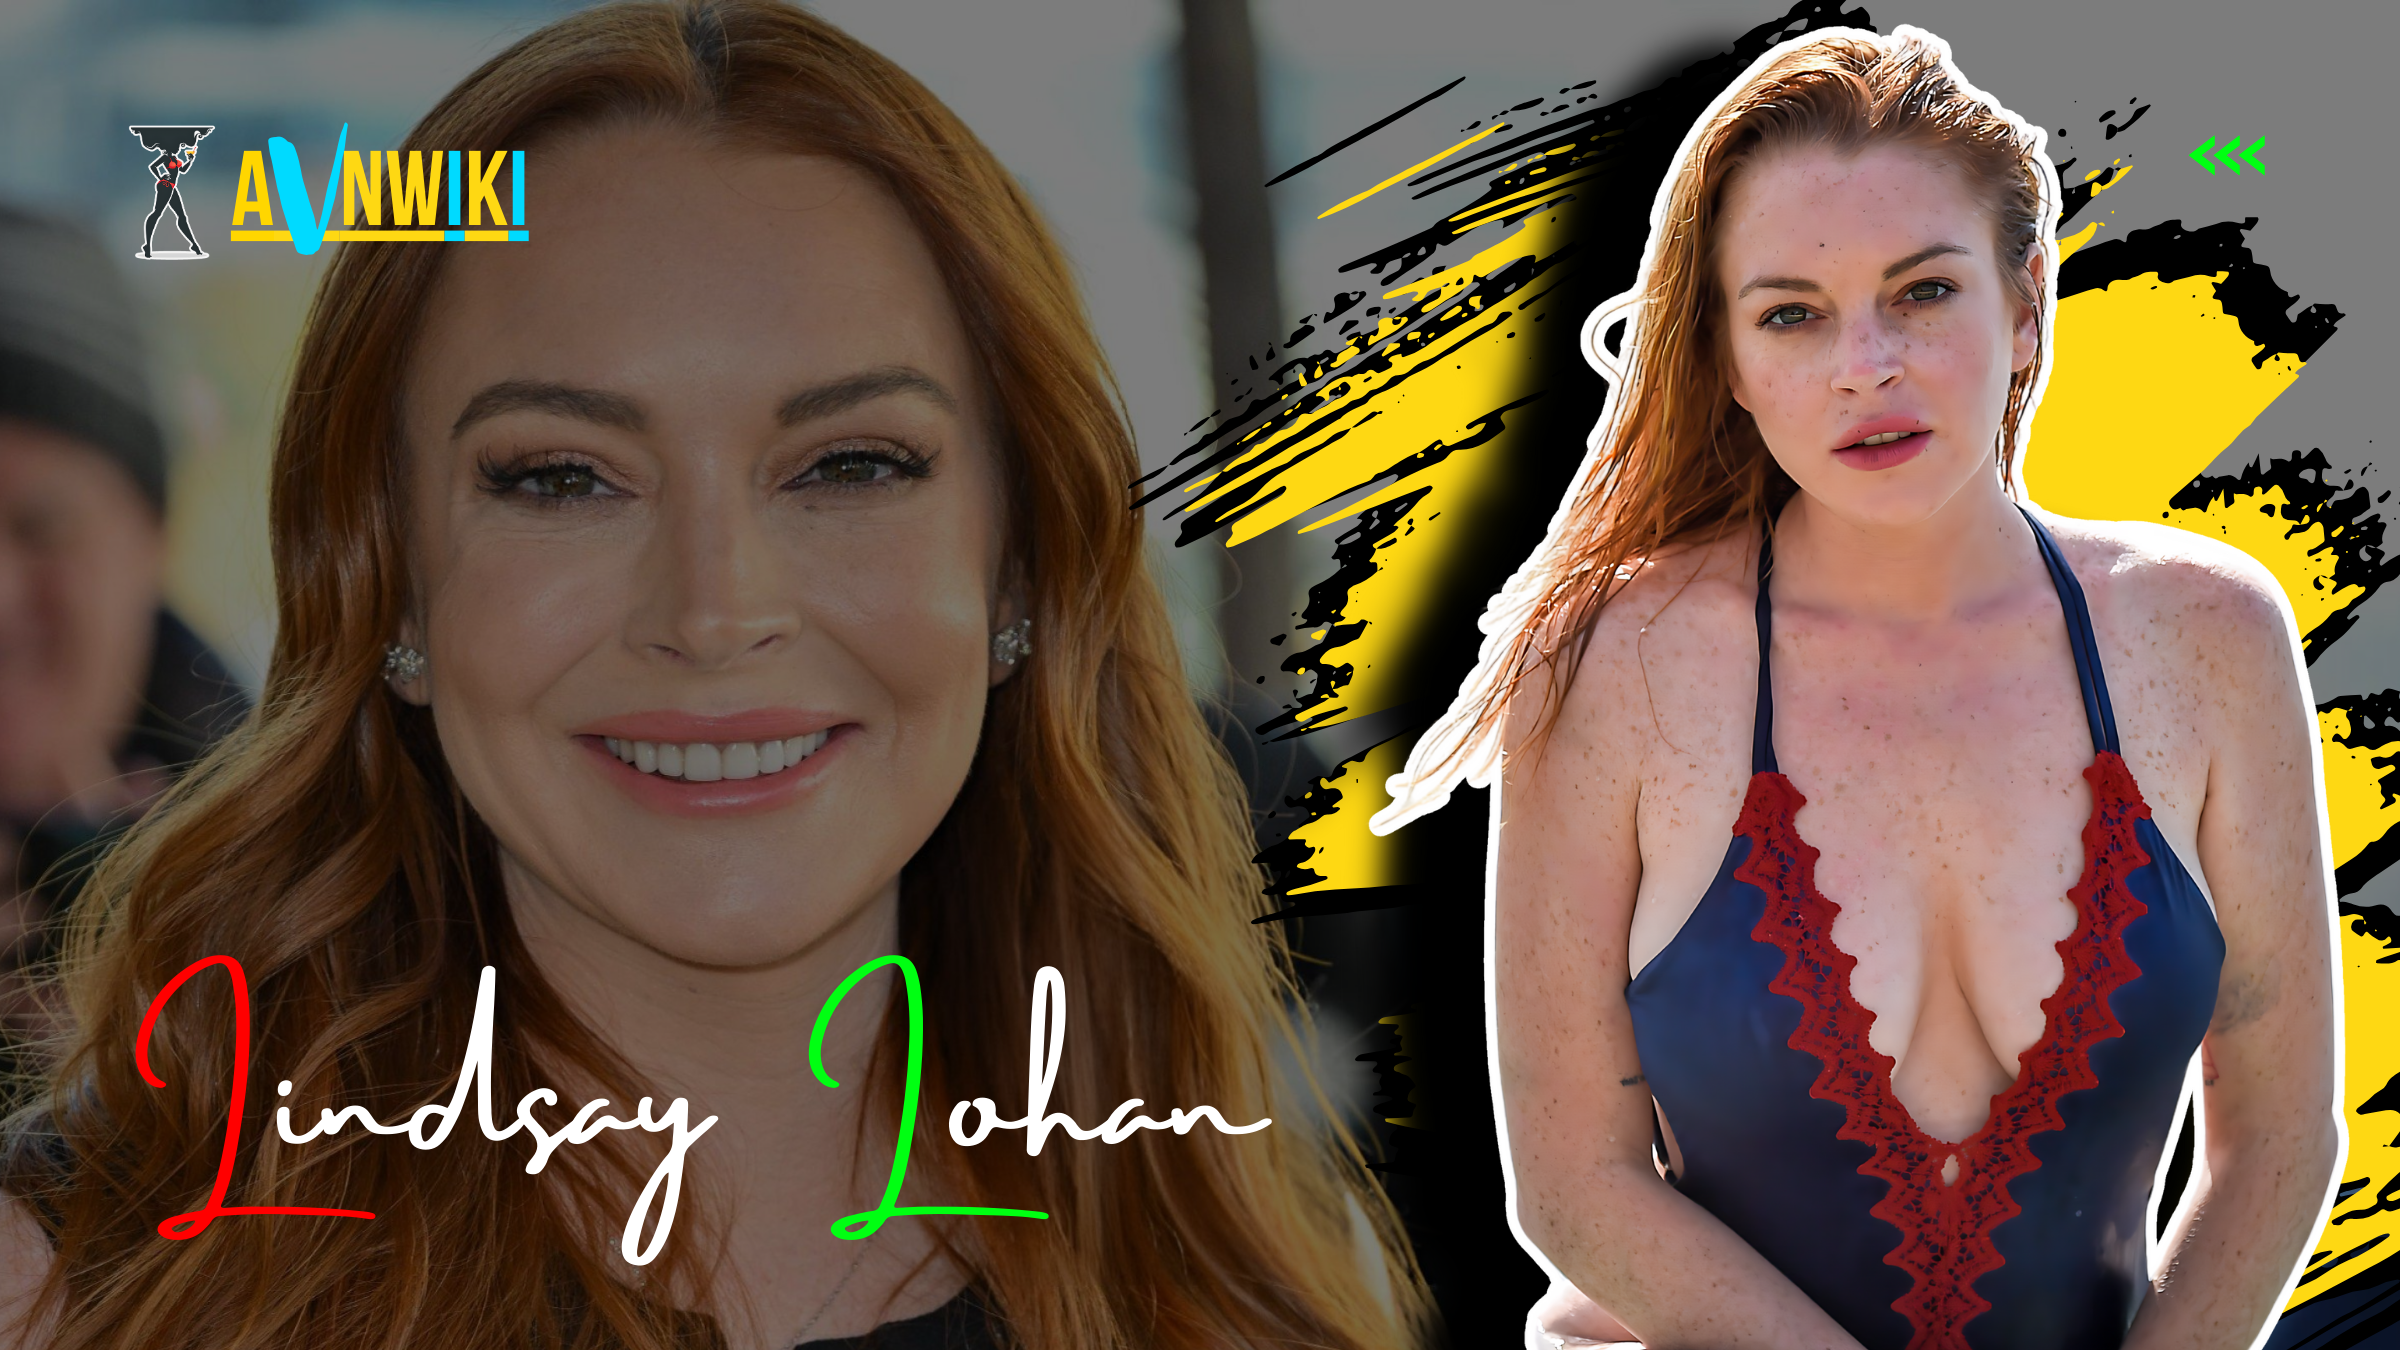 Lindsay Lohan Biography, Wiki, Age, Height, Husband, Movies, Pics